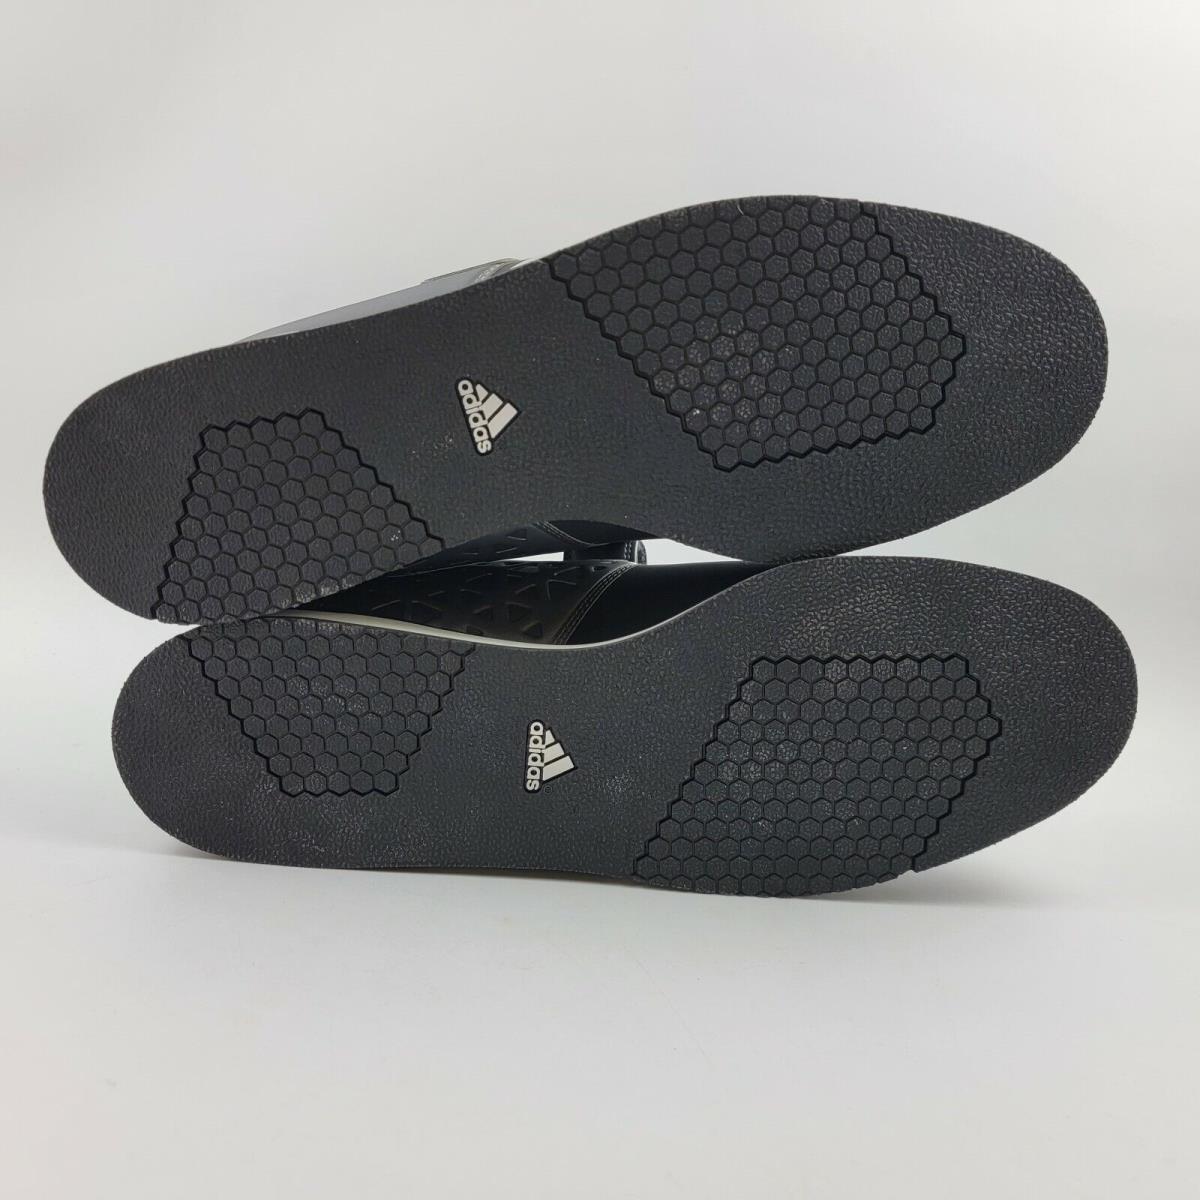 Adidas shoes Powerlift - Black 7